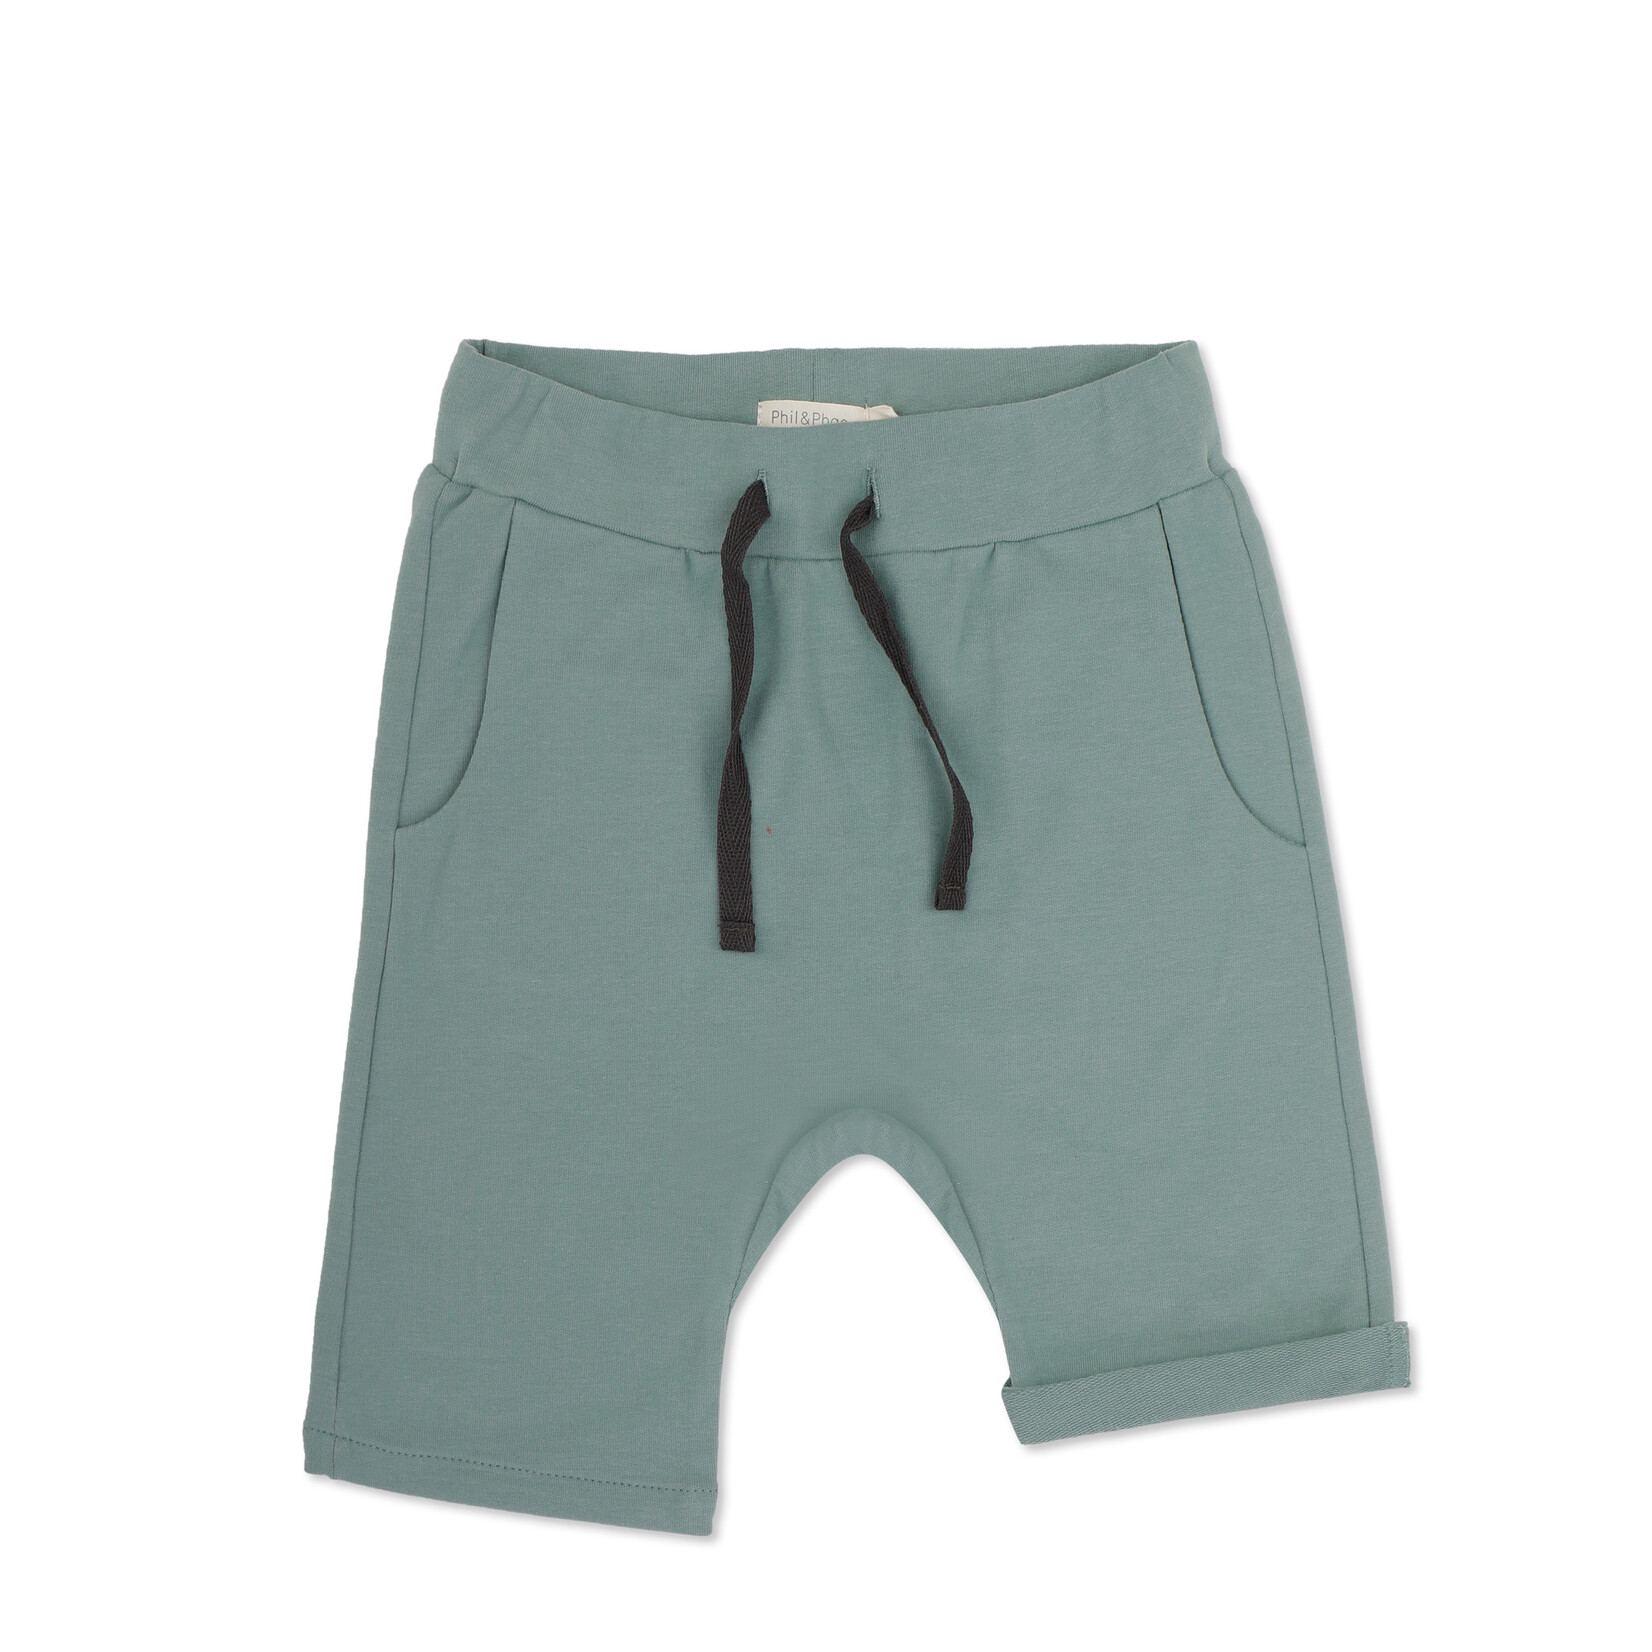 Phil&Phae Phil&Phae - Drop-crotch shorts - sea glass